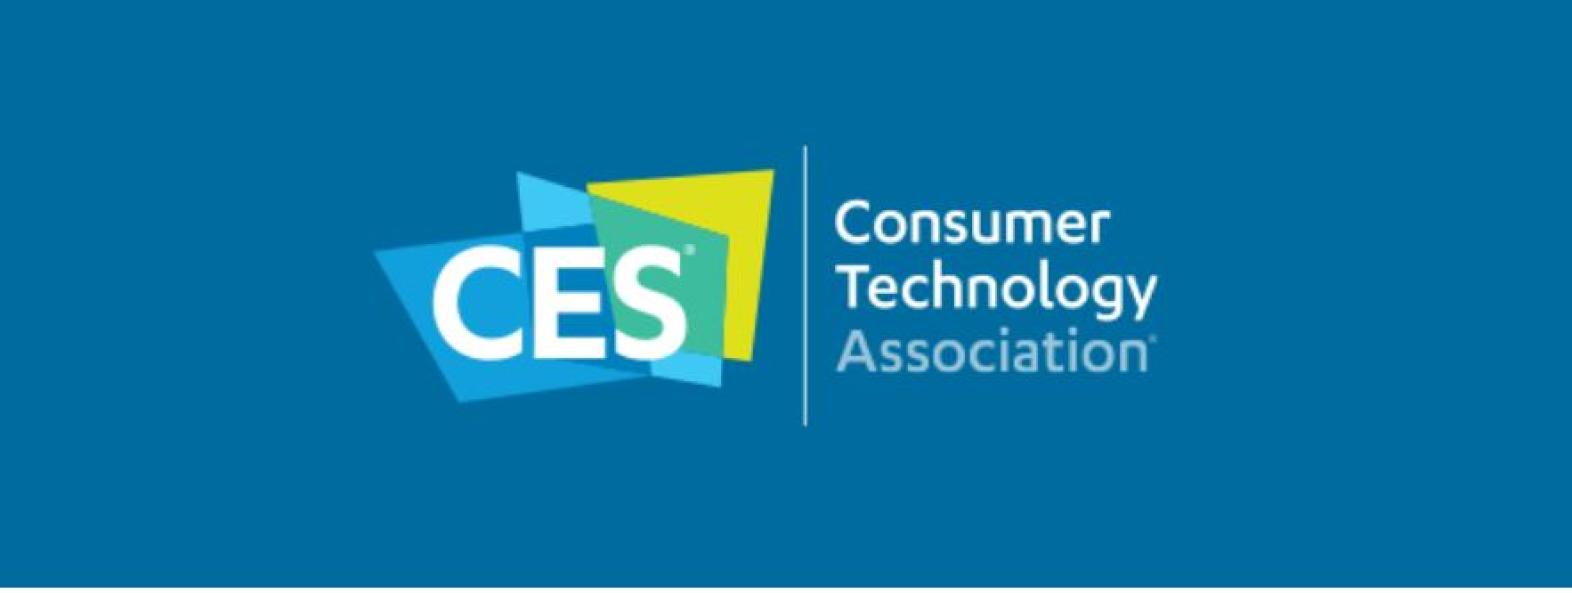 Consumer Technology Association (CES) logo